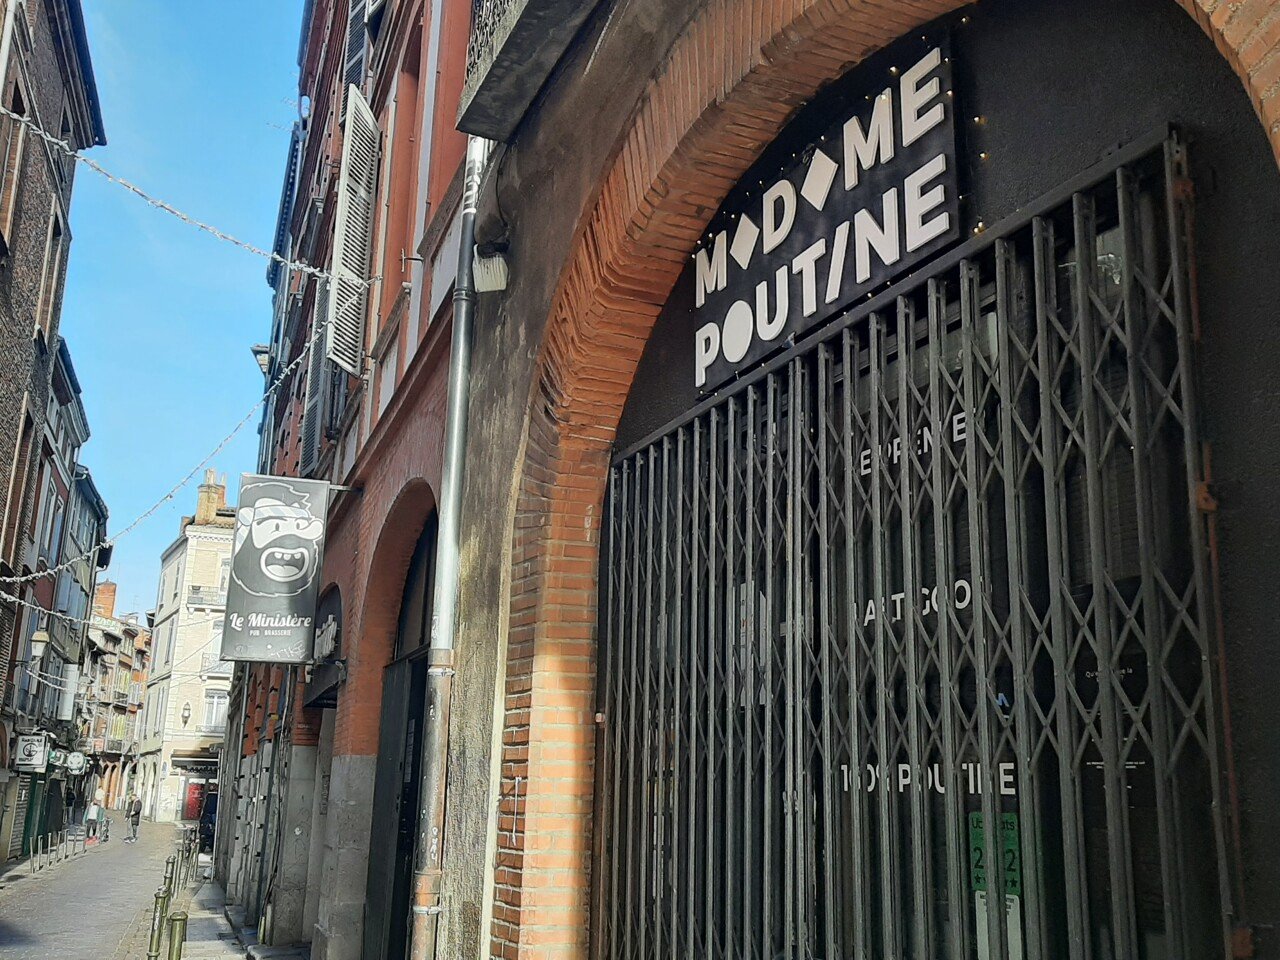 Madame Poutine restaurant is located in rue Peyrolières.